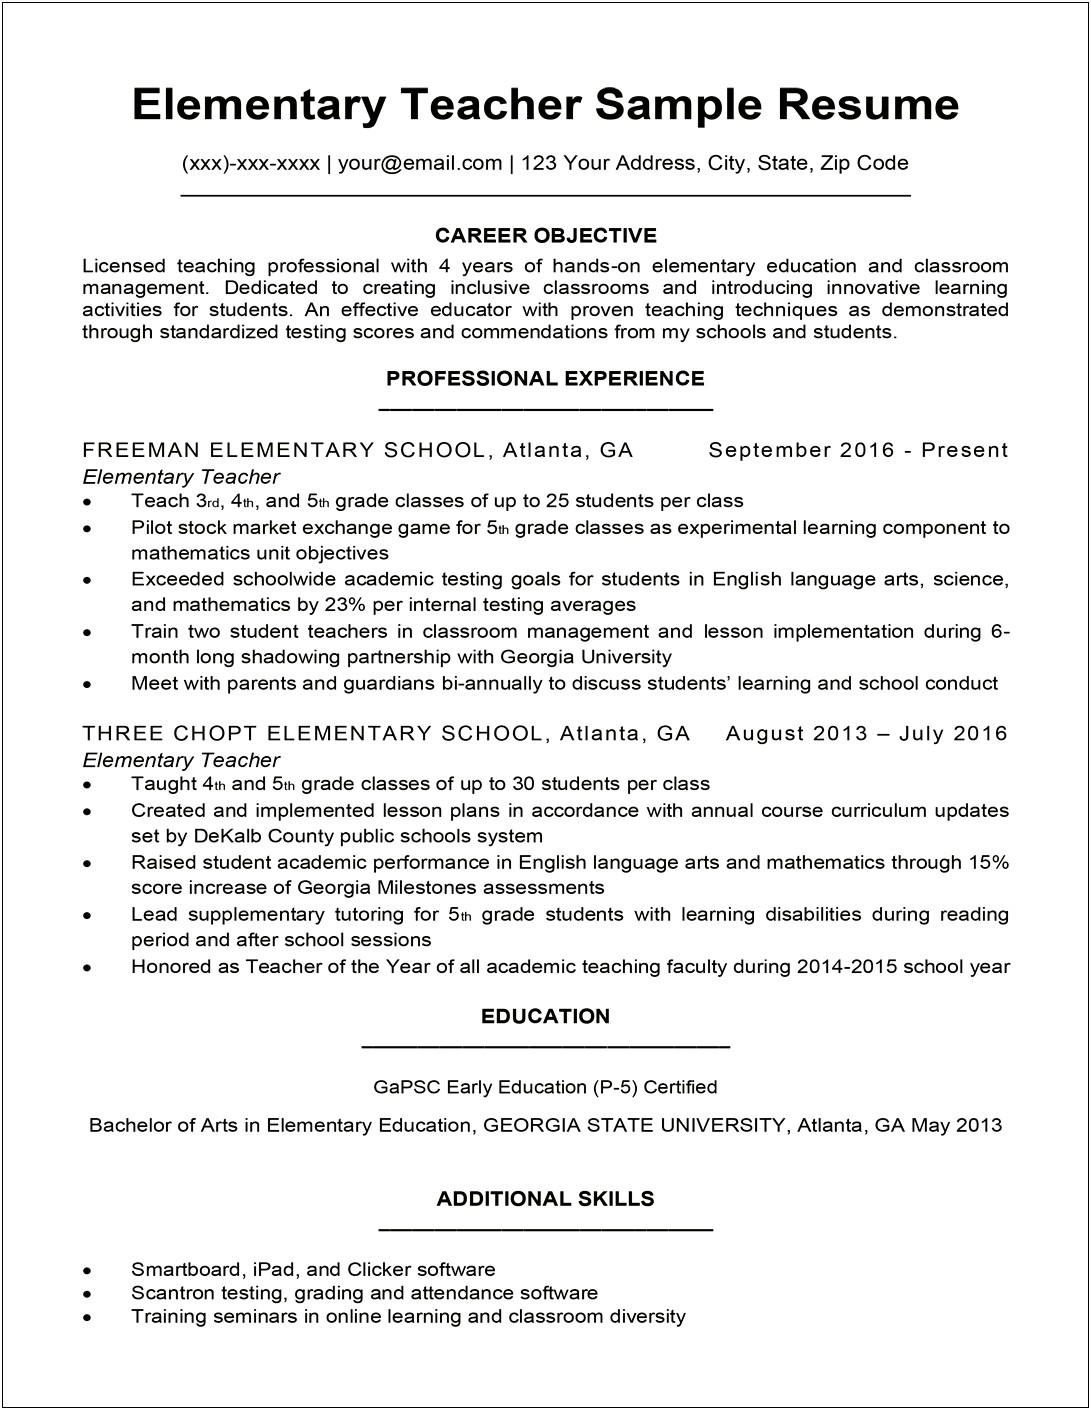 Resume Objective For School Job